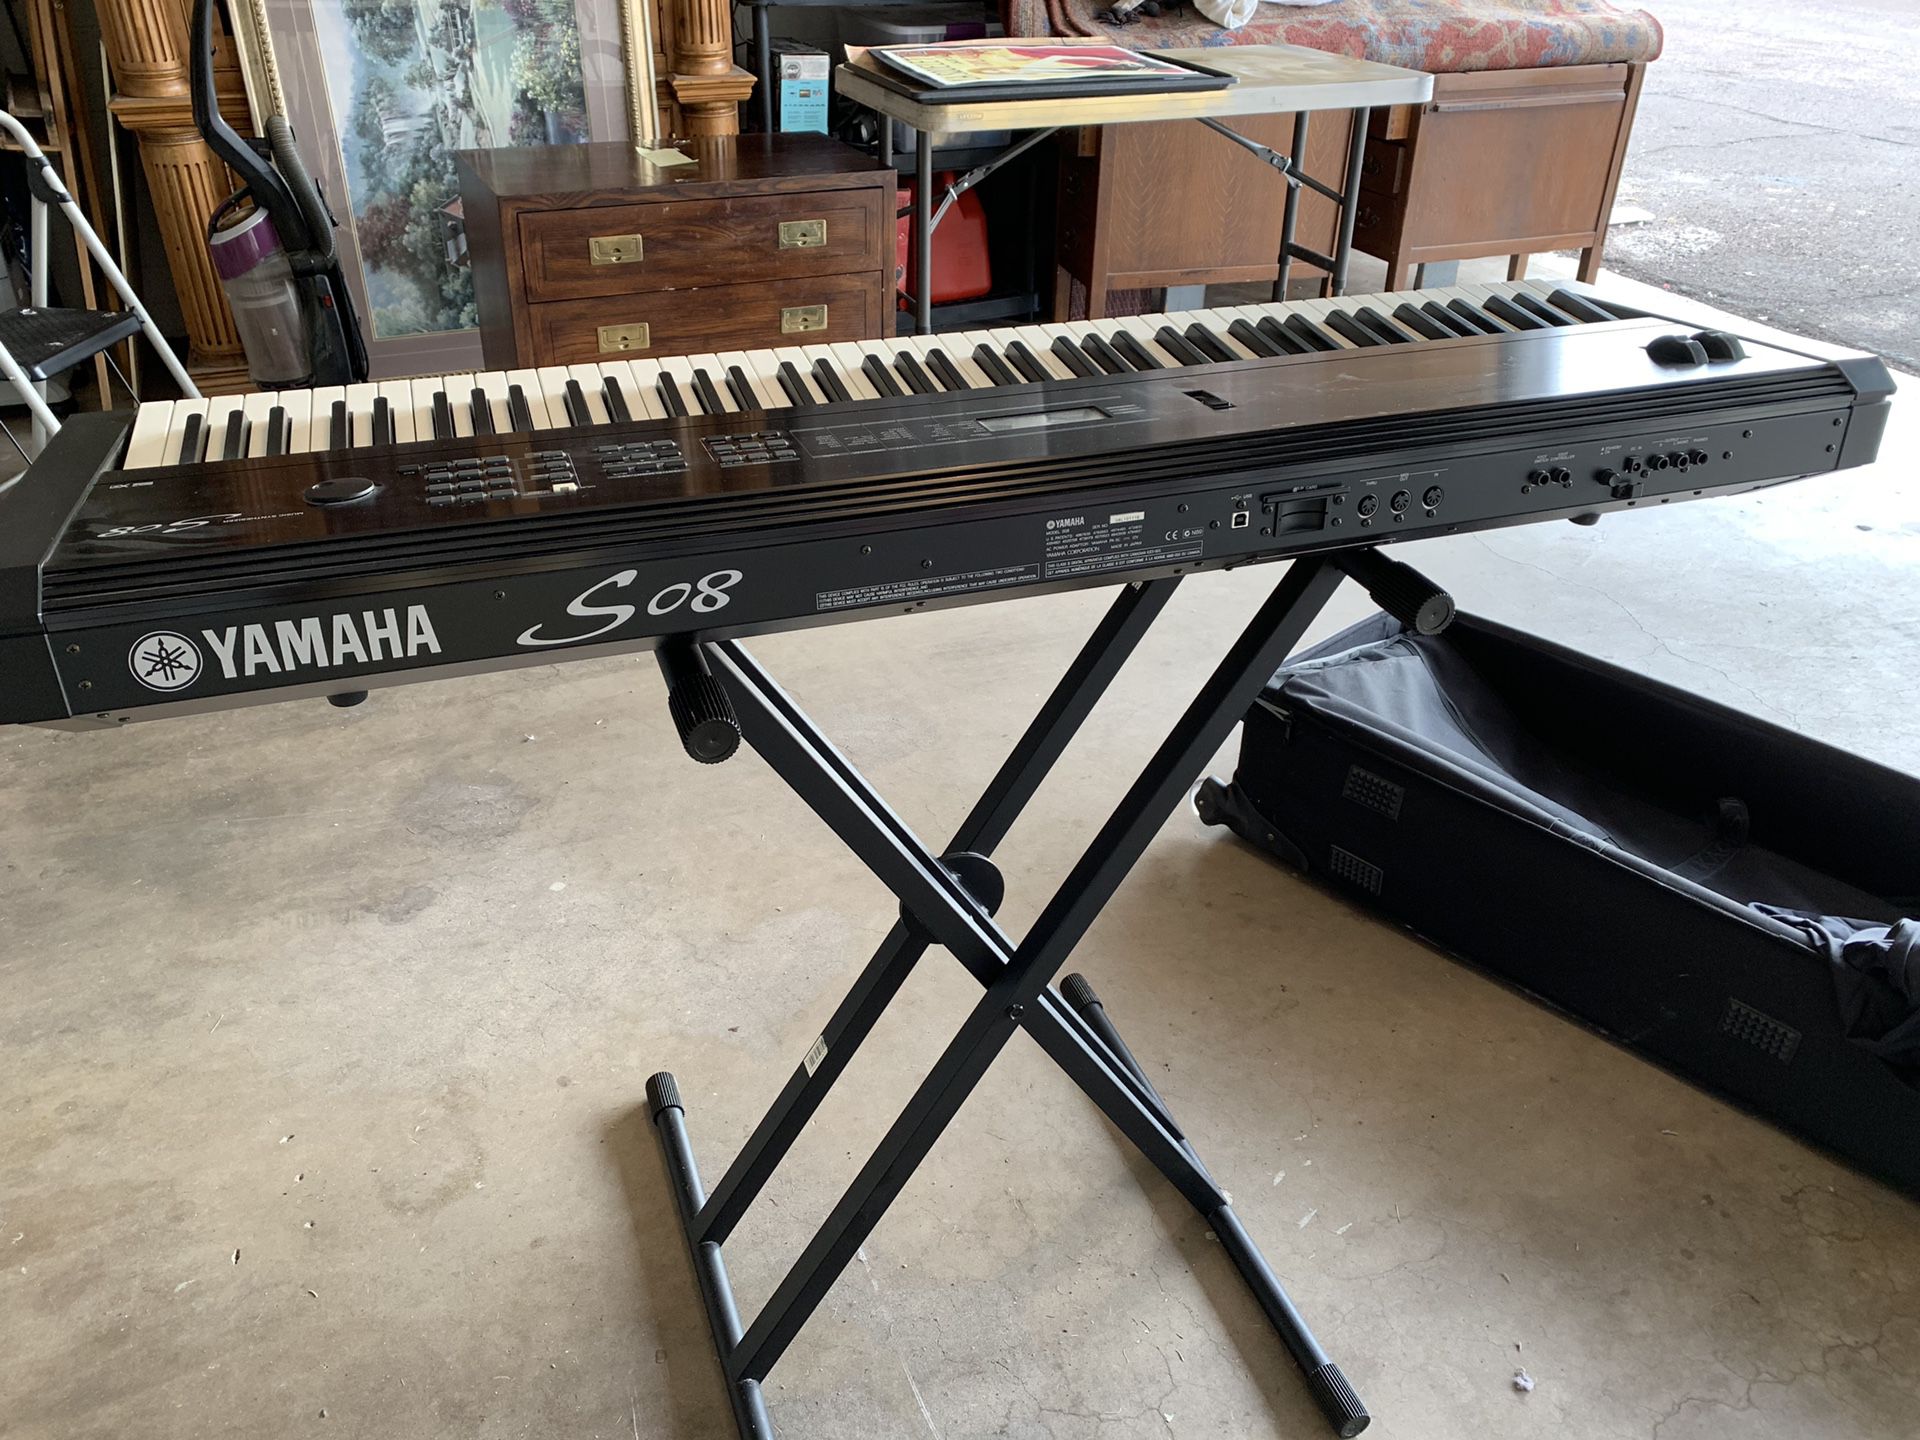 Yamaha S08 Keyboard, Stand, and Cade